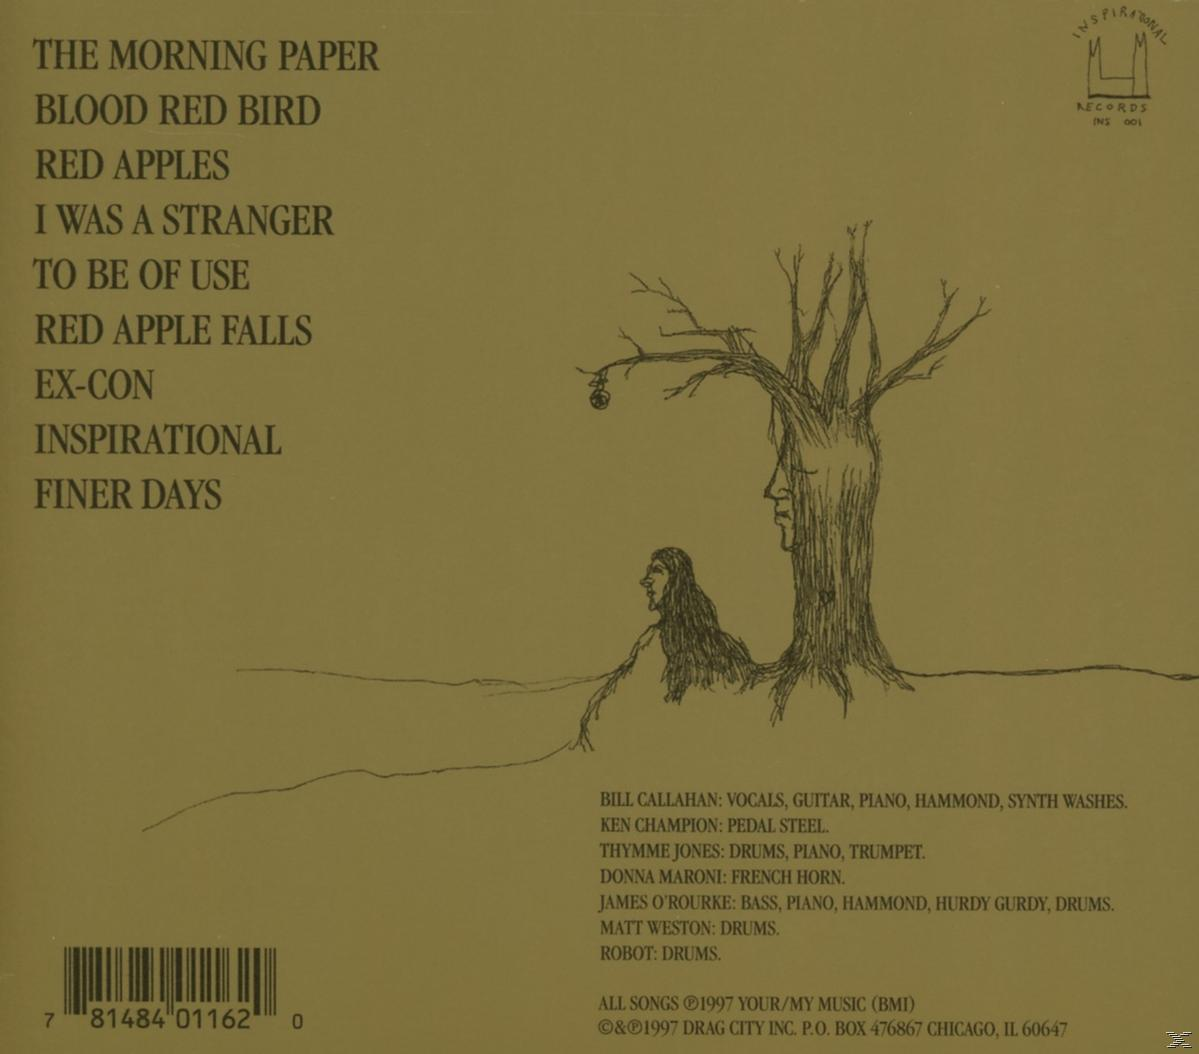 Smog - Falls - Apple Red (CD)